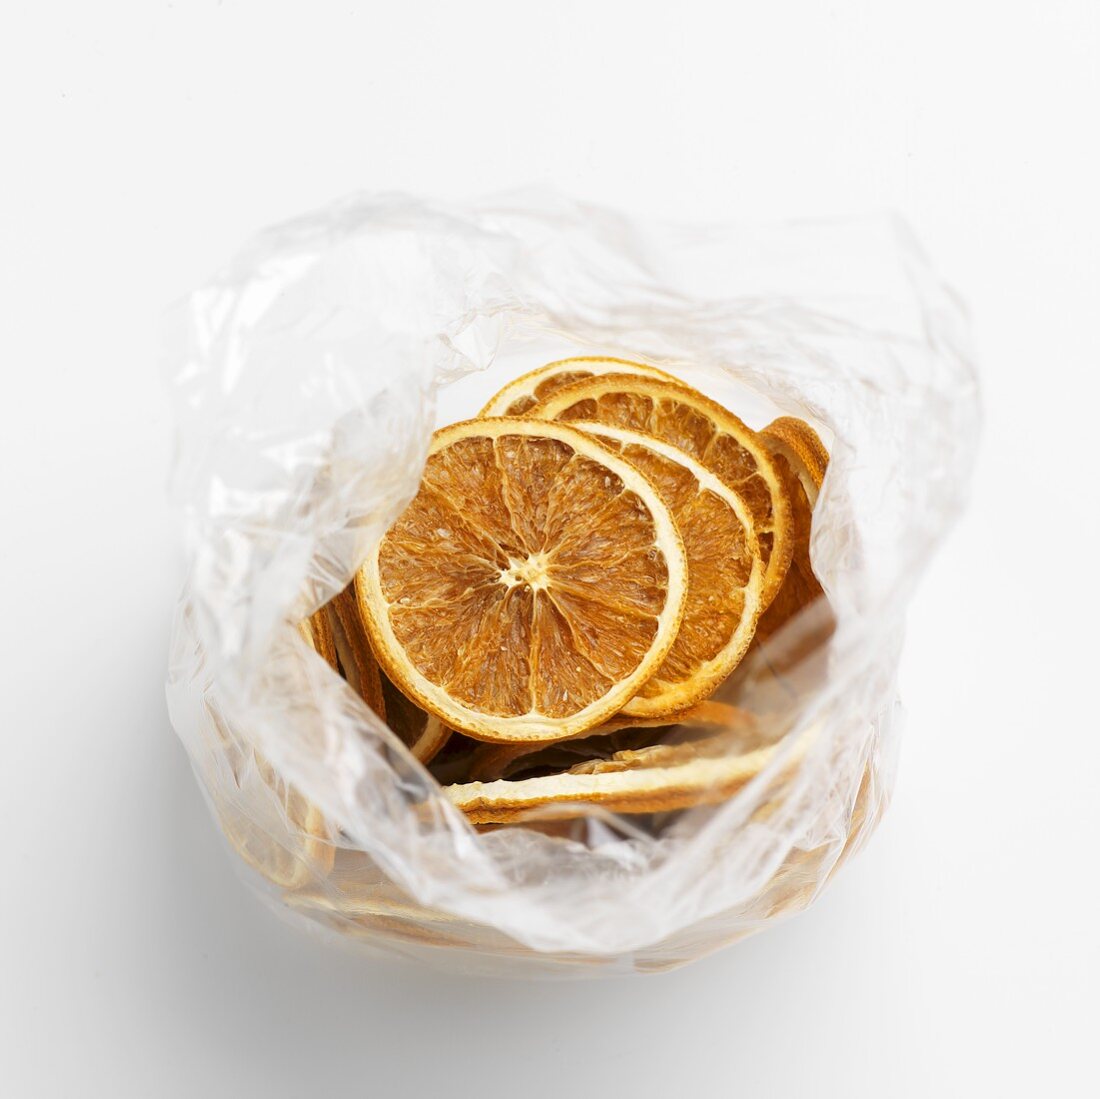 Dried orange slices in a plastic bag